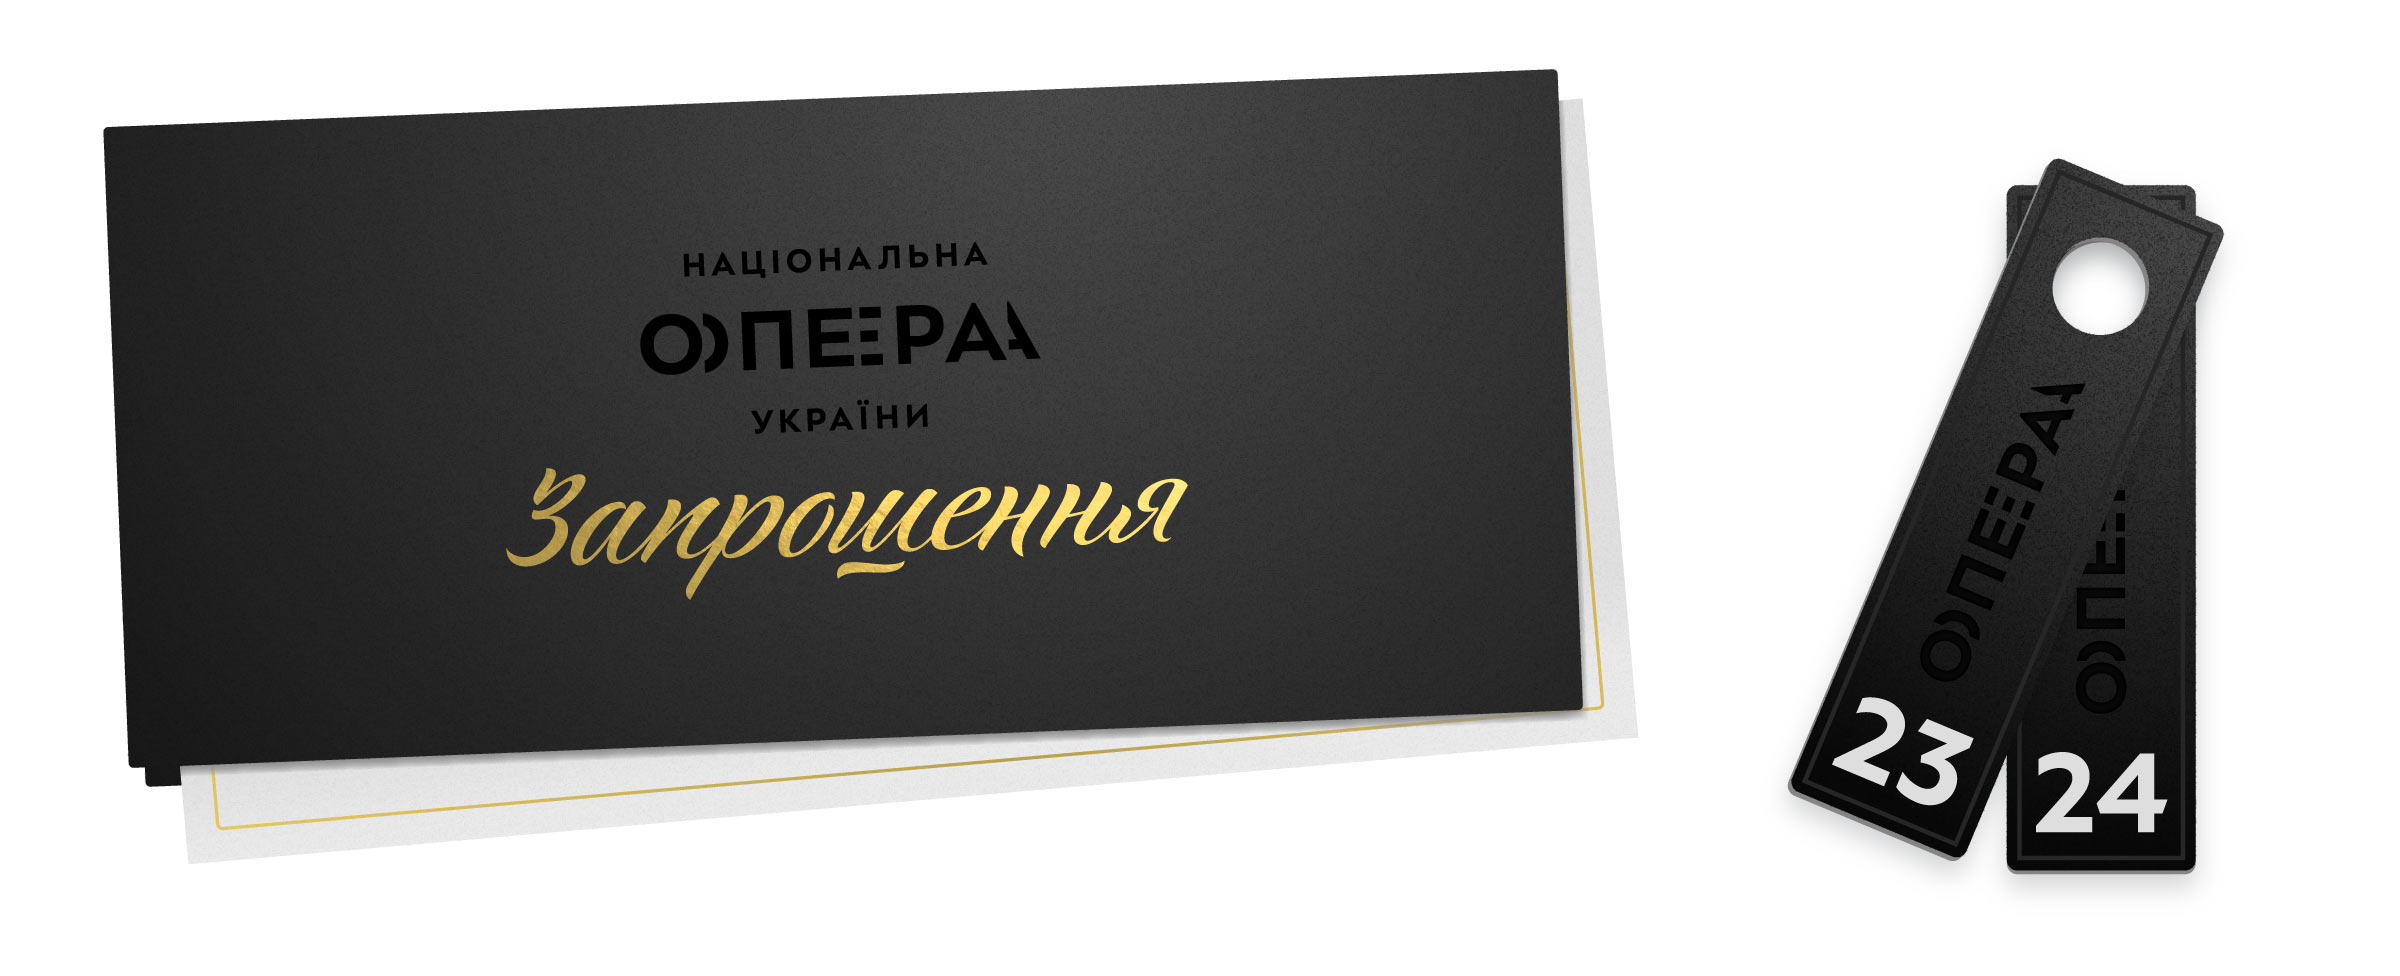 kyiv opera invitation